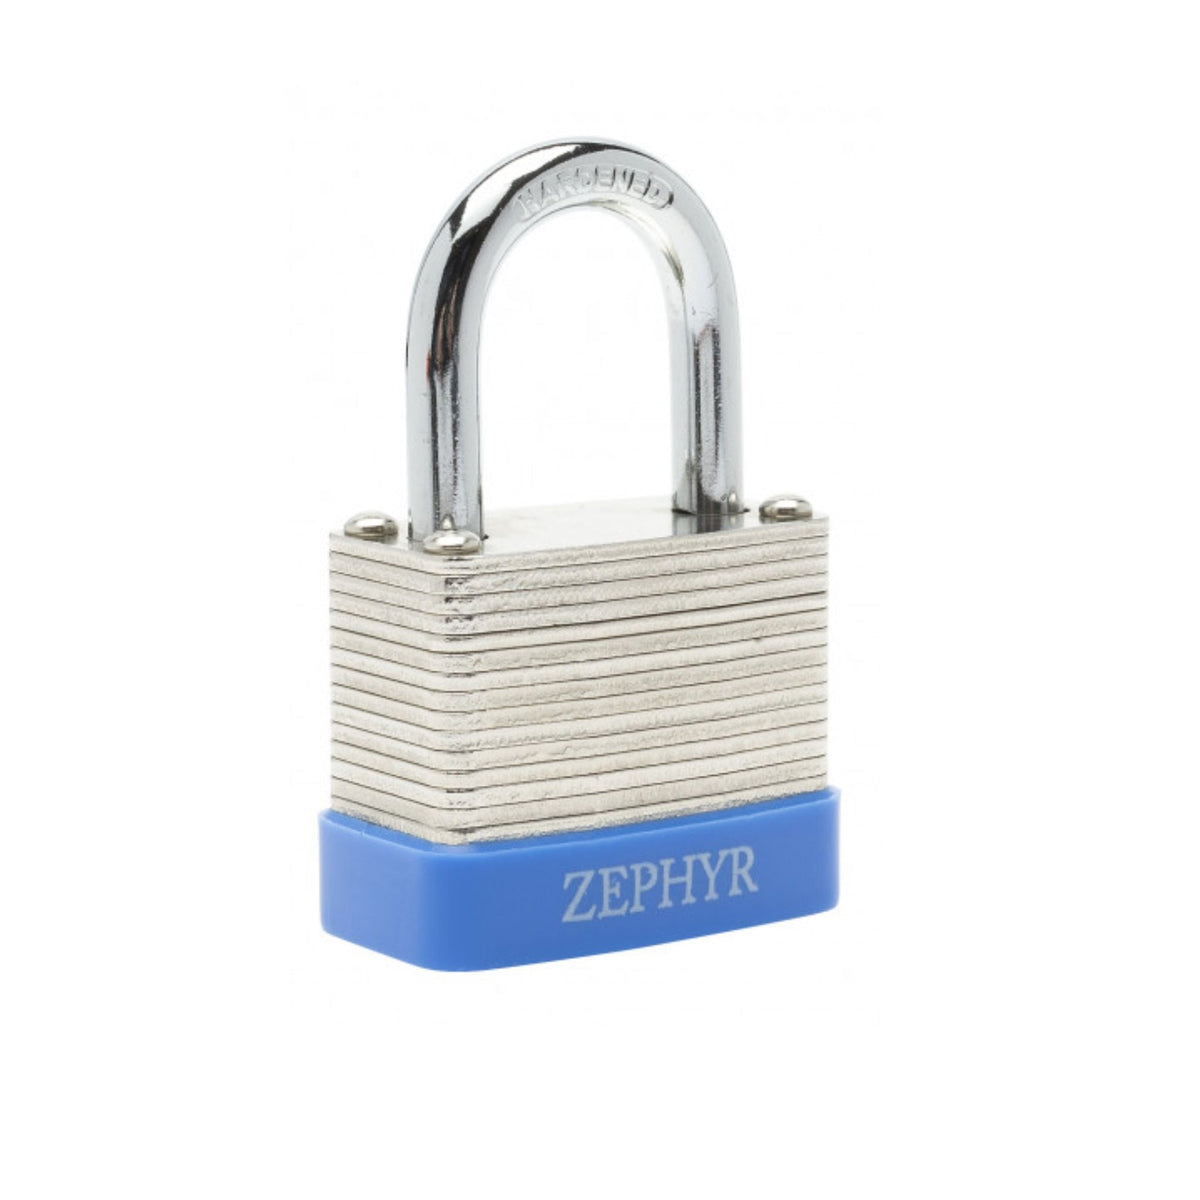 Zephyr Lock Laminated Steel Combination Locks 18074 &amp; 18050 Padlocks - The Lock Source